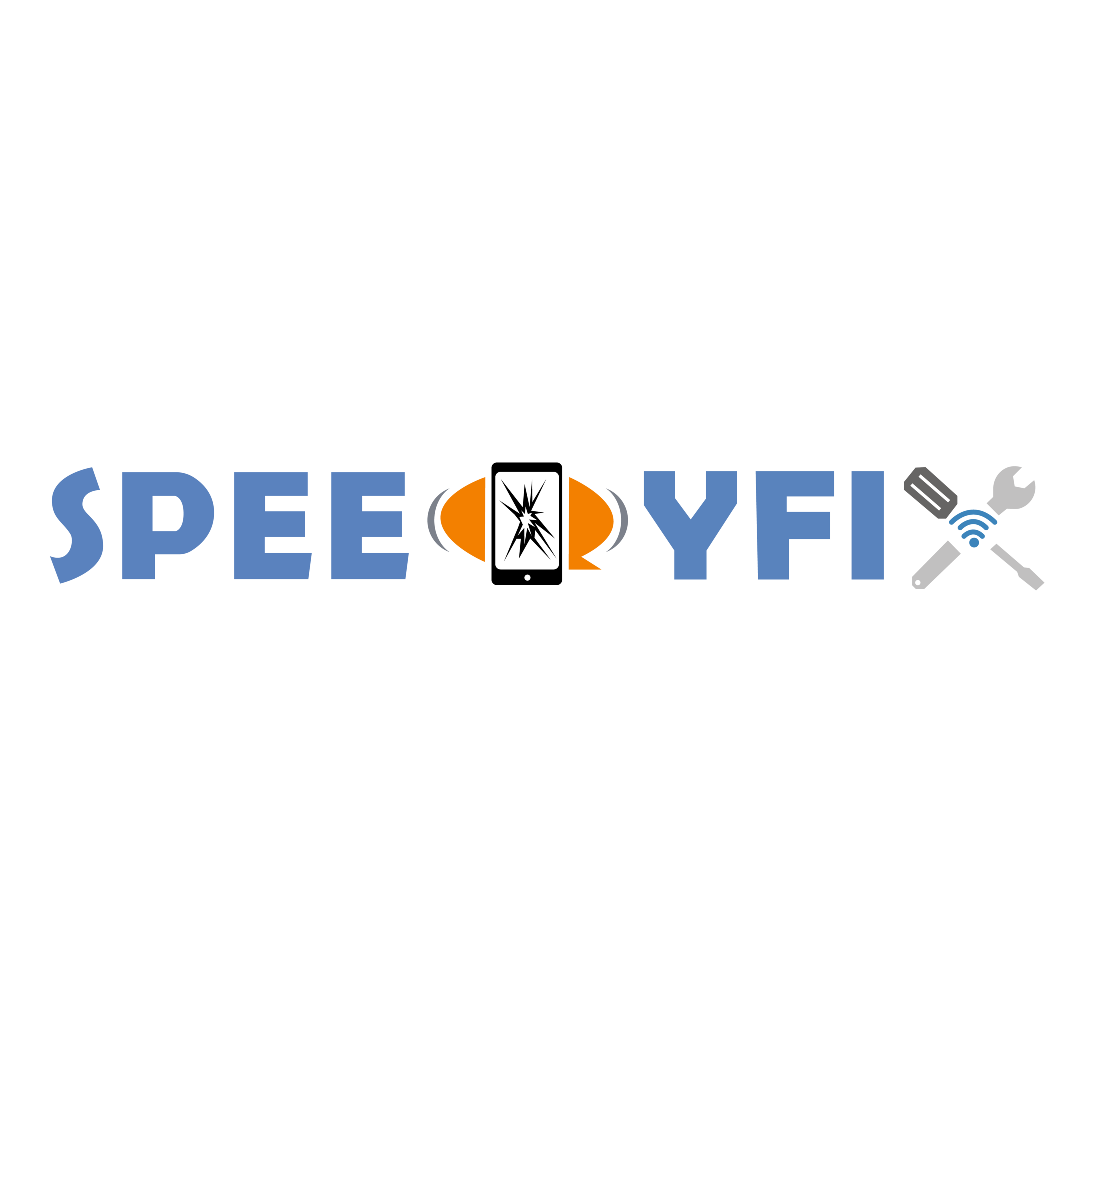 SPEEDYFIX-Laptop and Computer Repair-Motherboard,